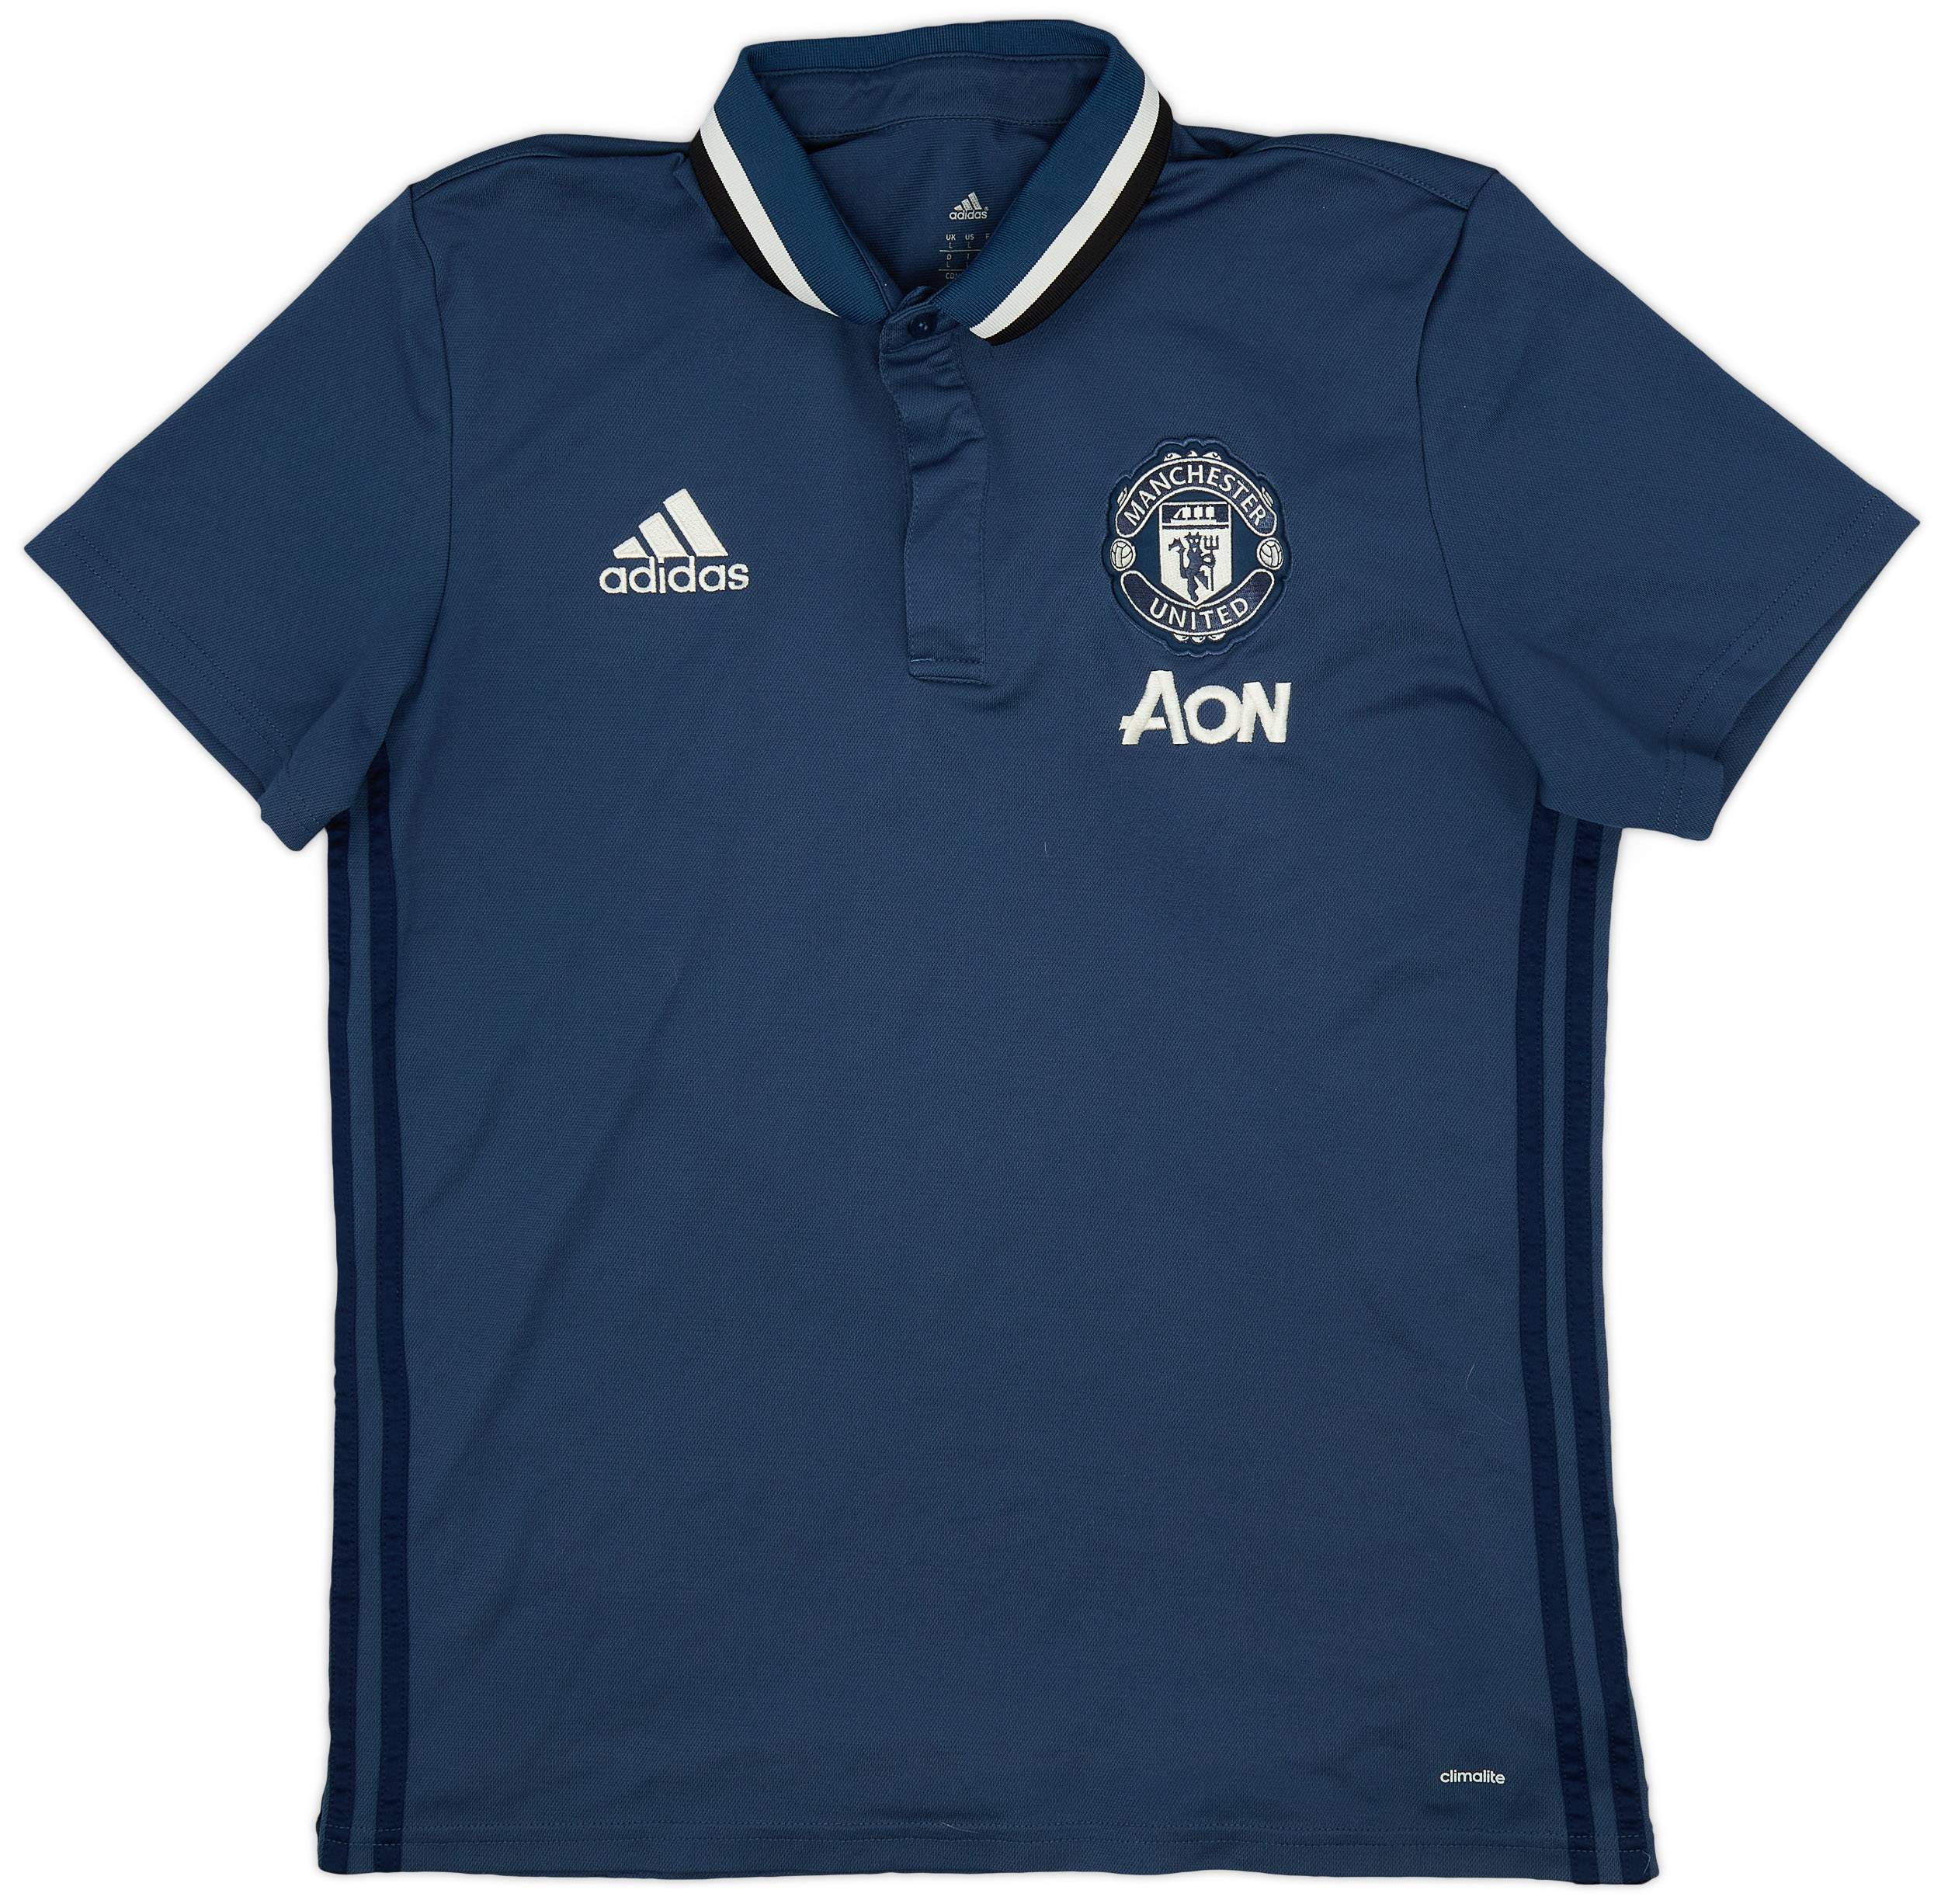 2016-17 Manchester United adidas Polo Shirt - 7/10 - (L)